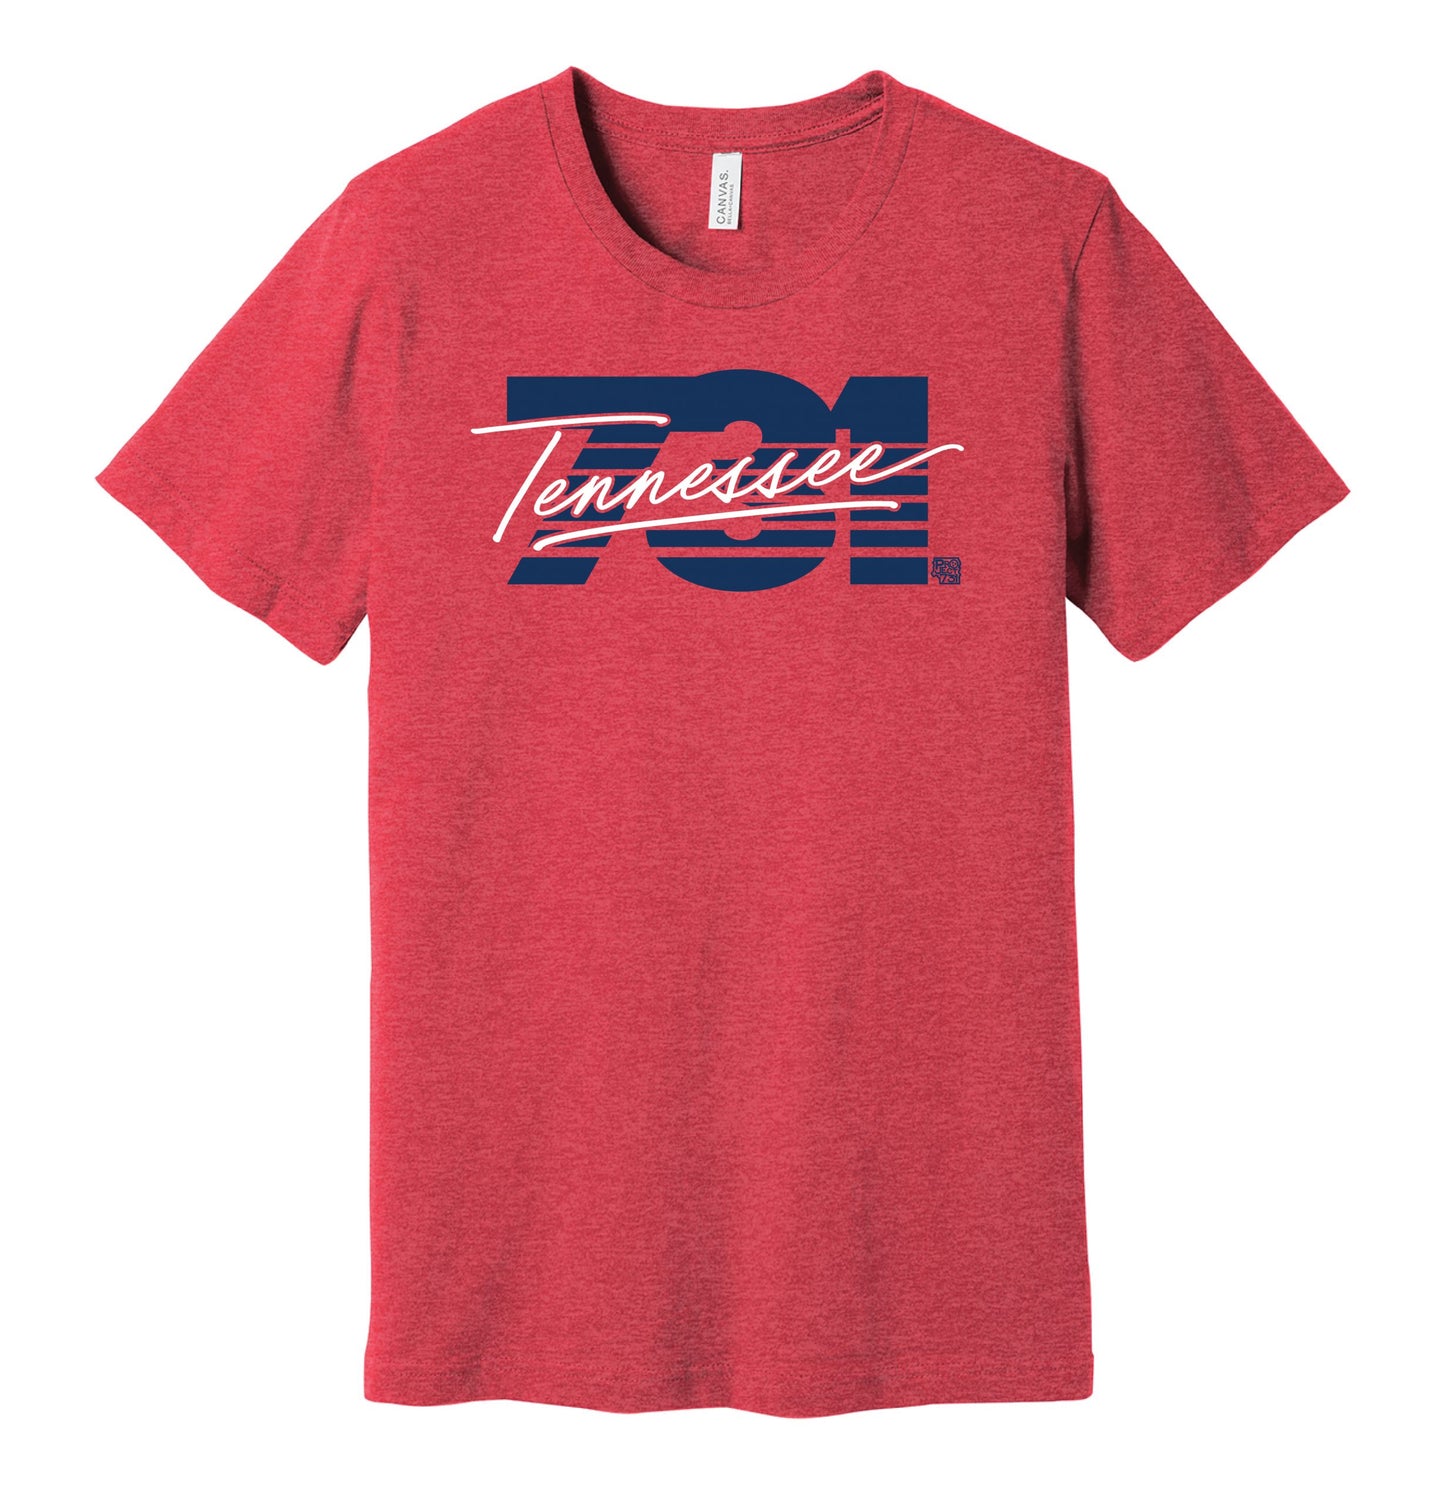 Retro 731 Tennessee USA T-shirt